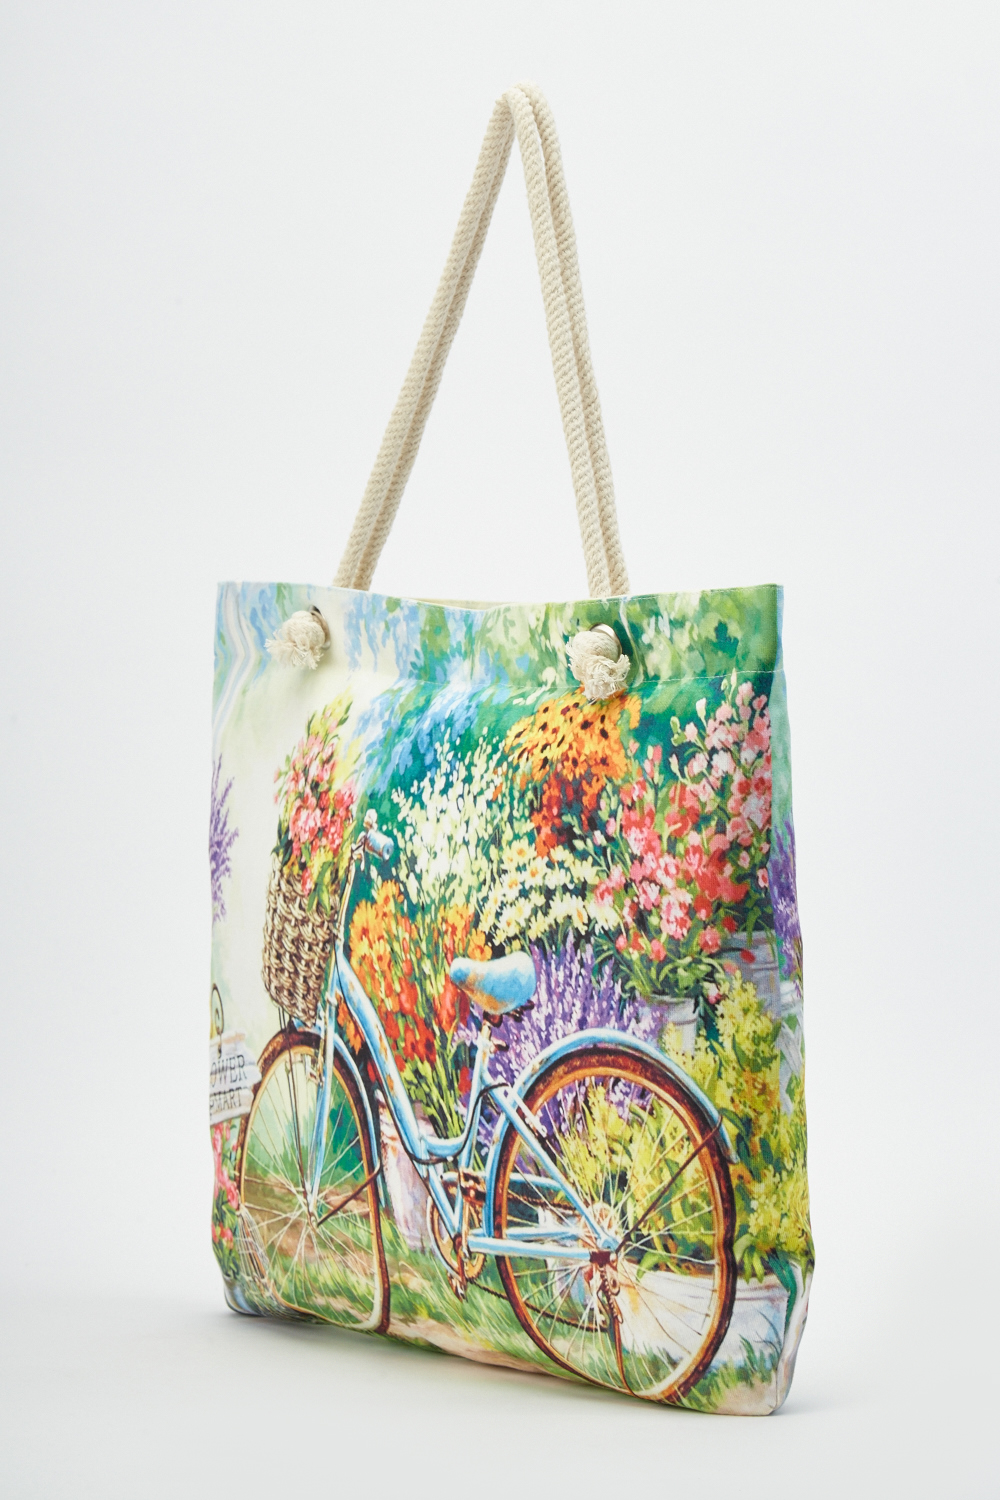 Floral Bicycle Print Tote Bag - Just $6